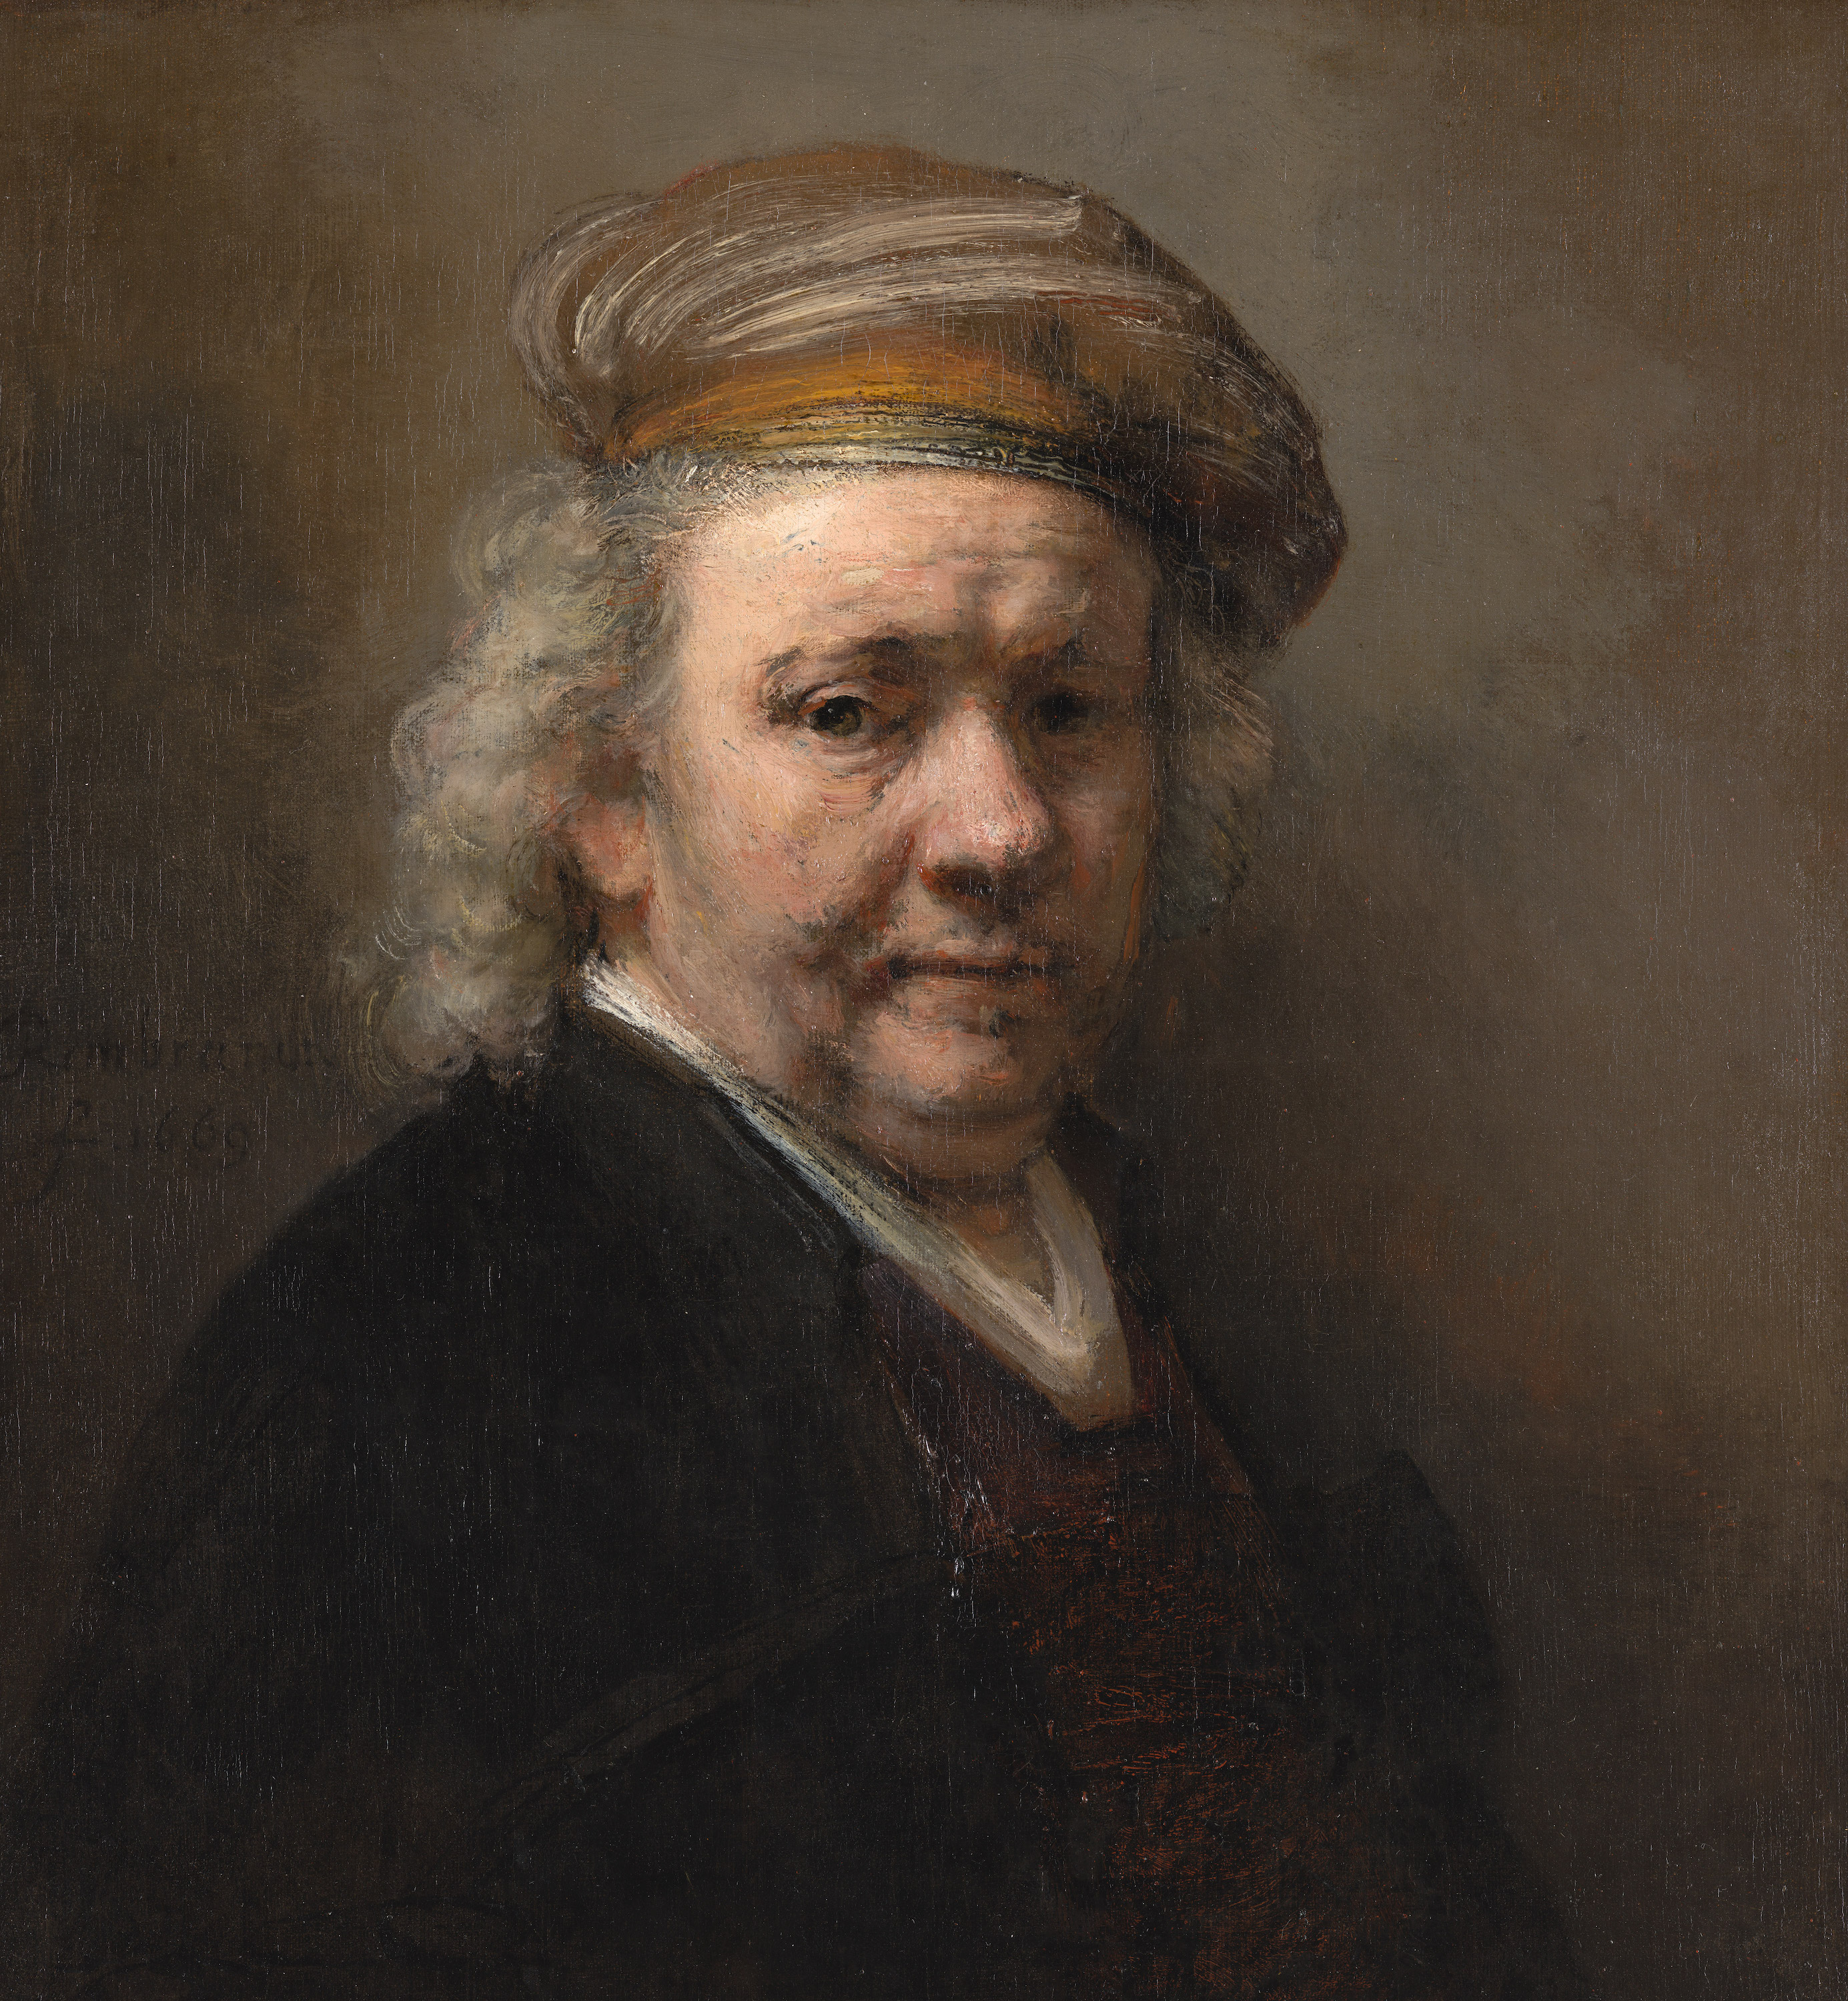 自画像 by Rembrandt van Rijn - 1669 - 65.4 x 60.2 cm 